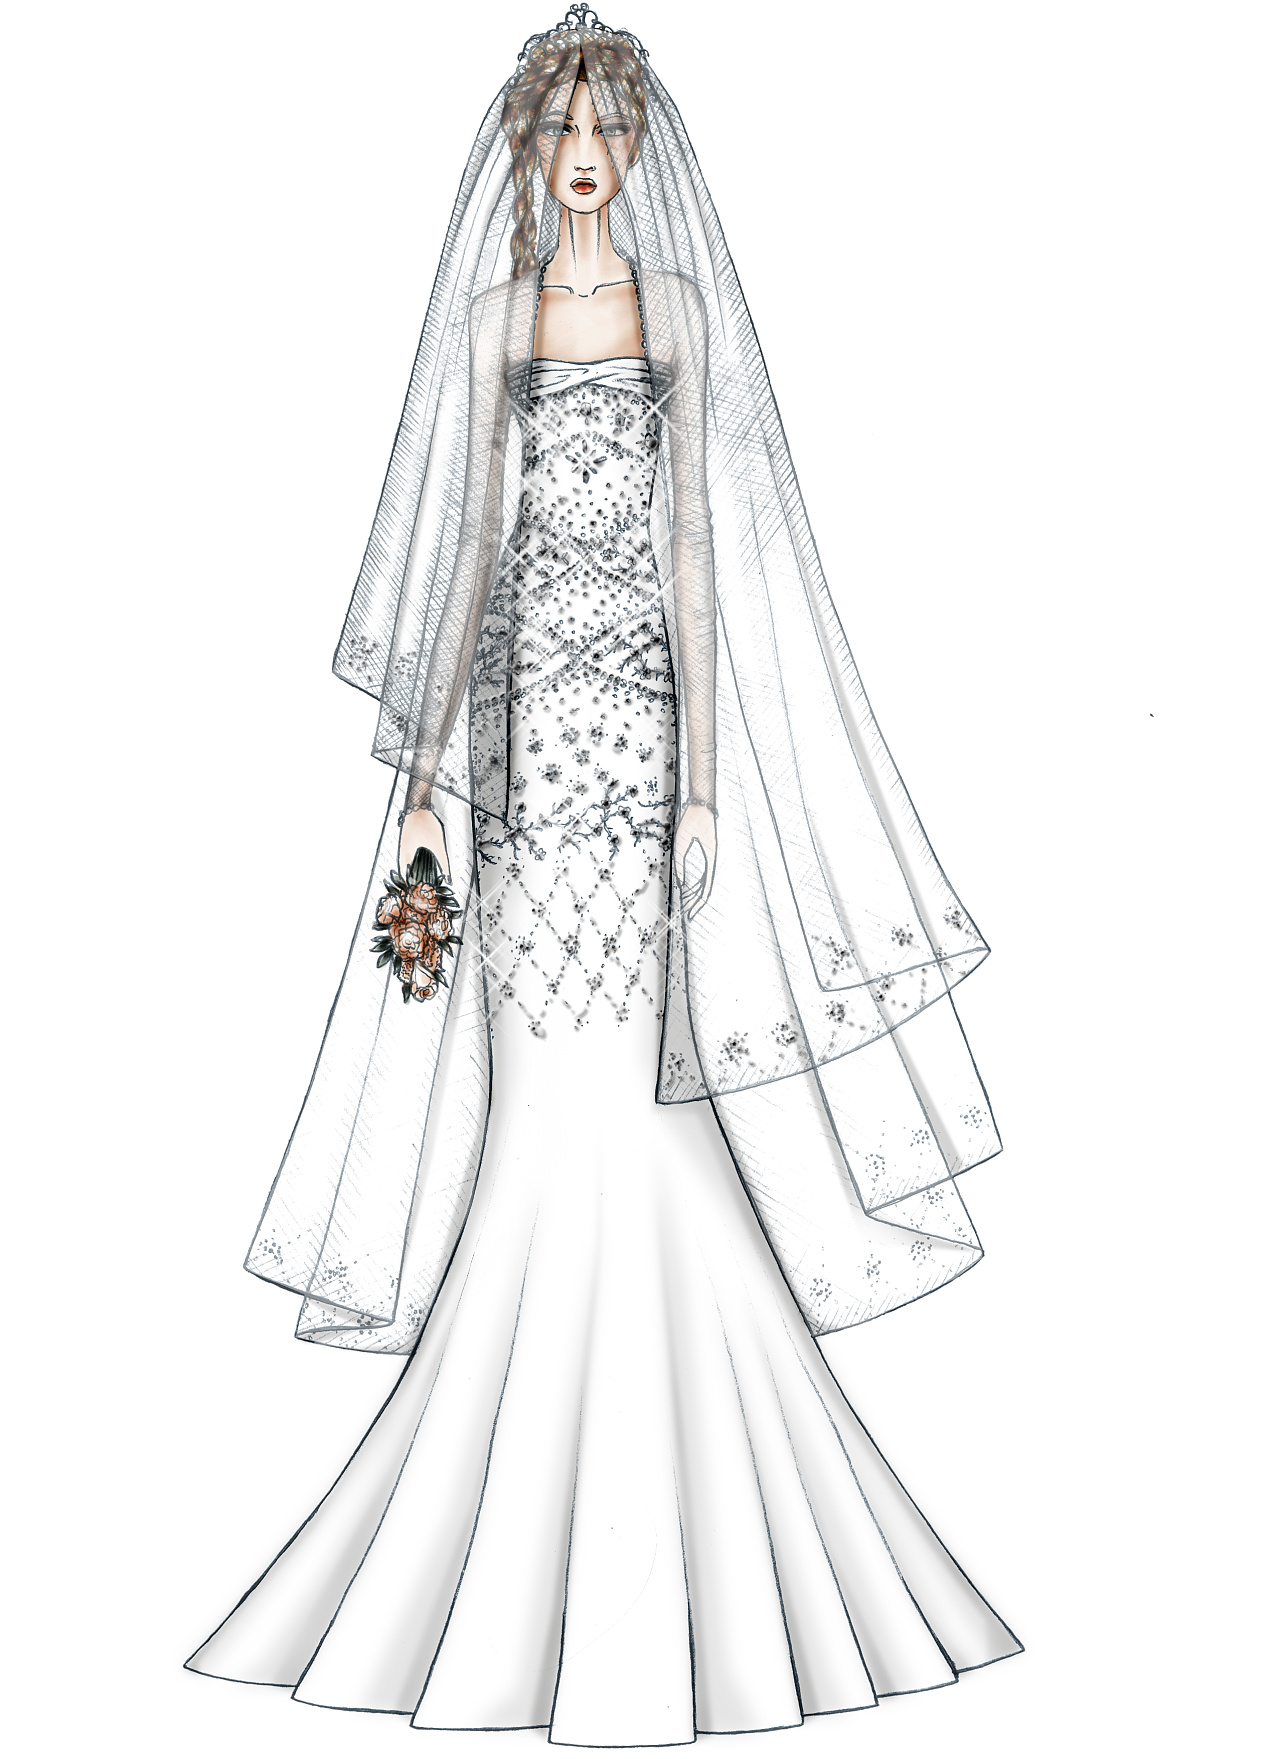 ShiniUni 婚纱作品欣赏 - ShiniUni婚纱礼服高级定制设计 - 设计师品牌